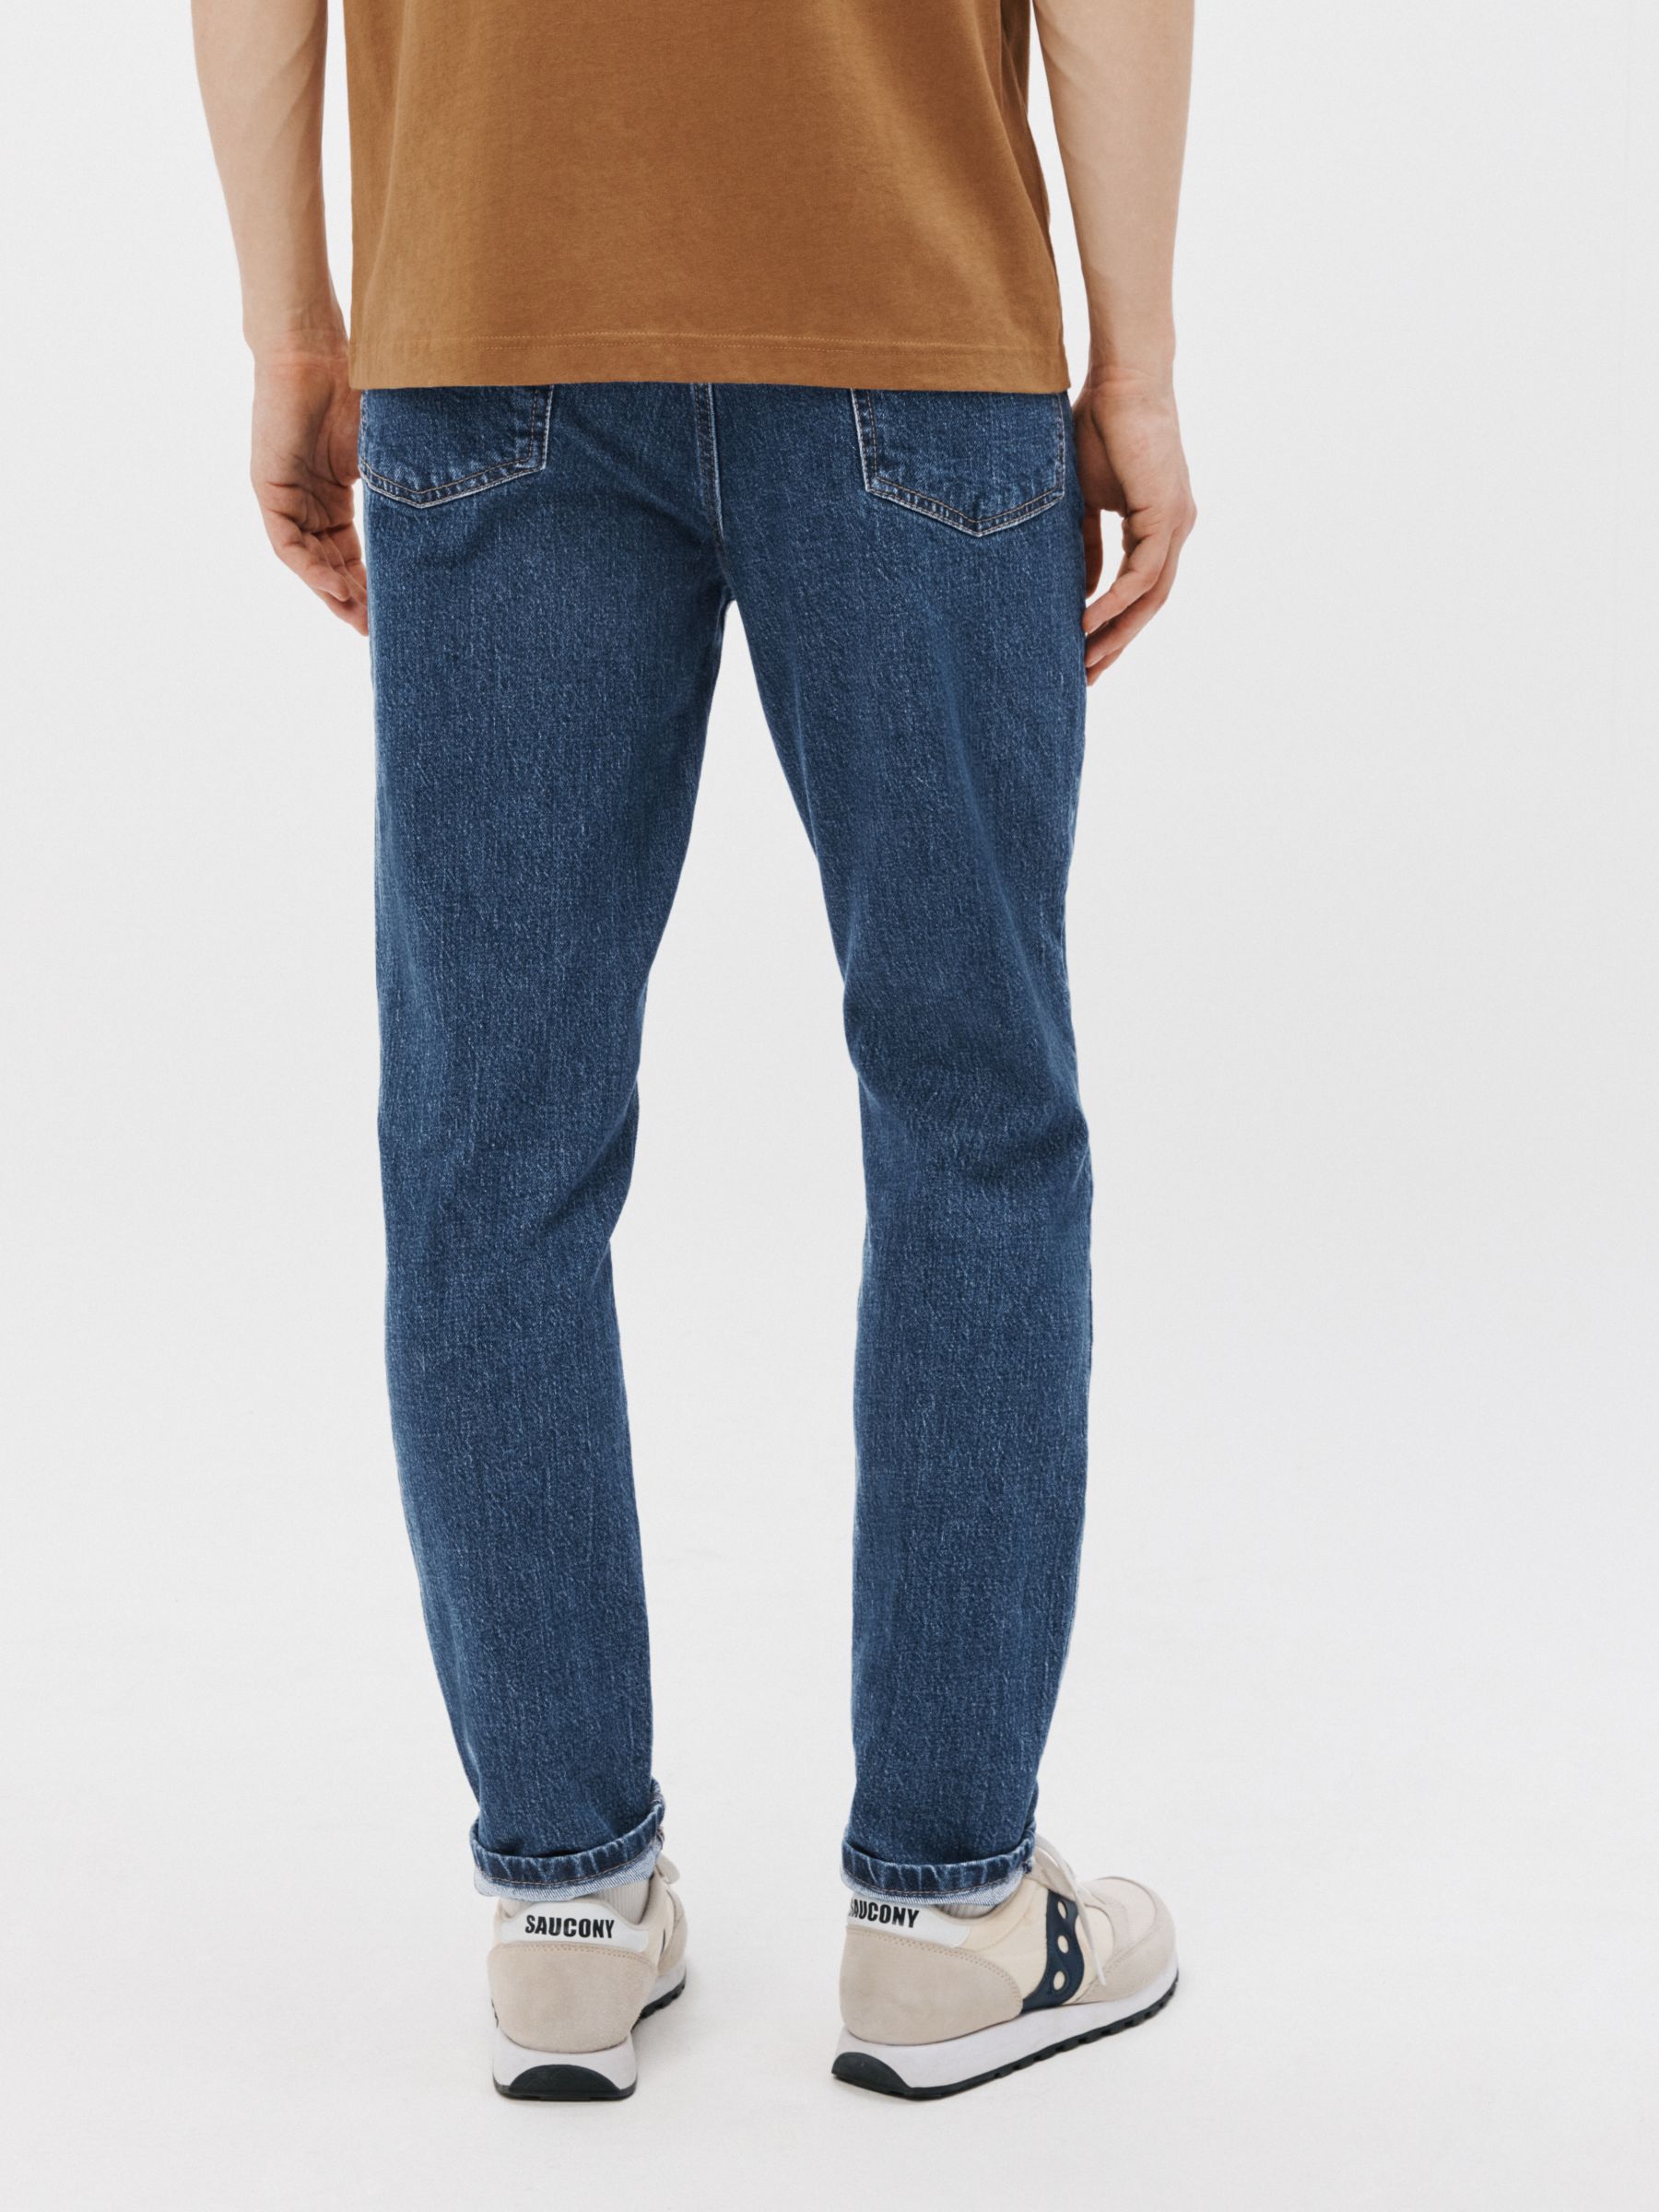 John Lewis ANYDAY Slim Fit Denim Jeans, Mid Wash, 30R